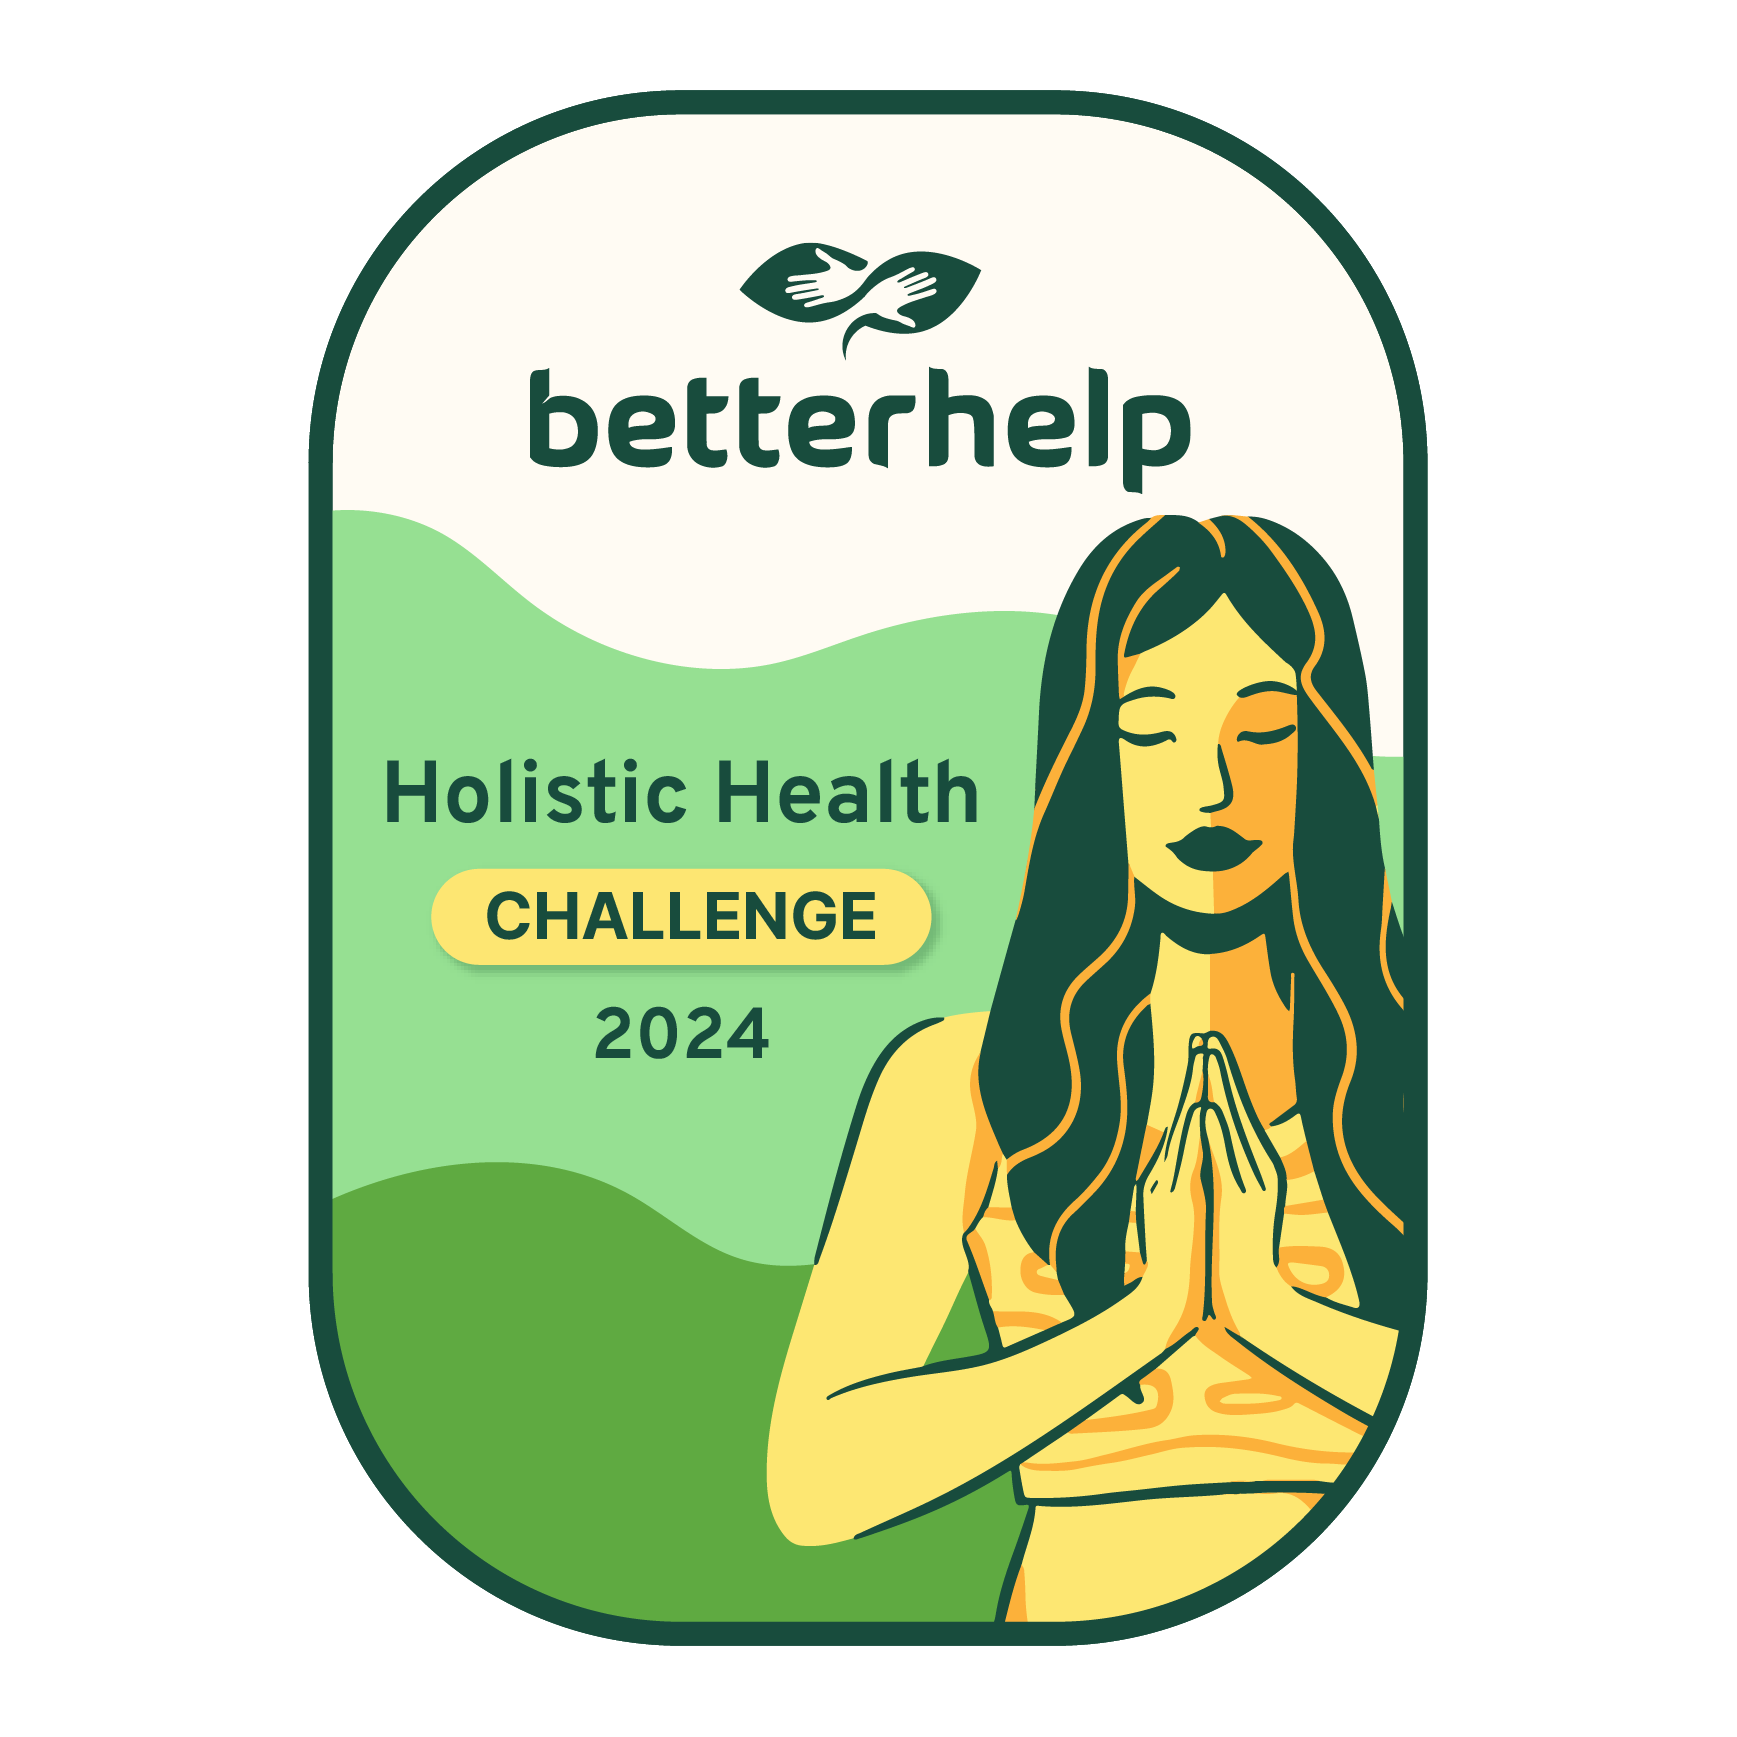 BetterHelp's Holistic Health Challenge